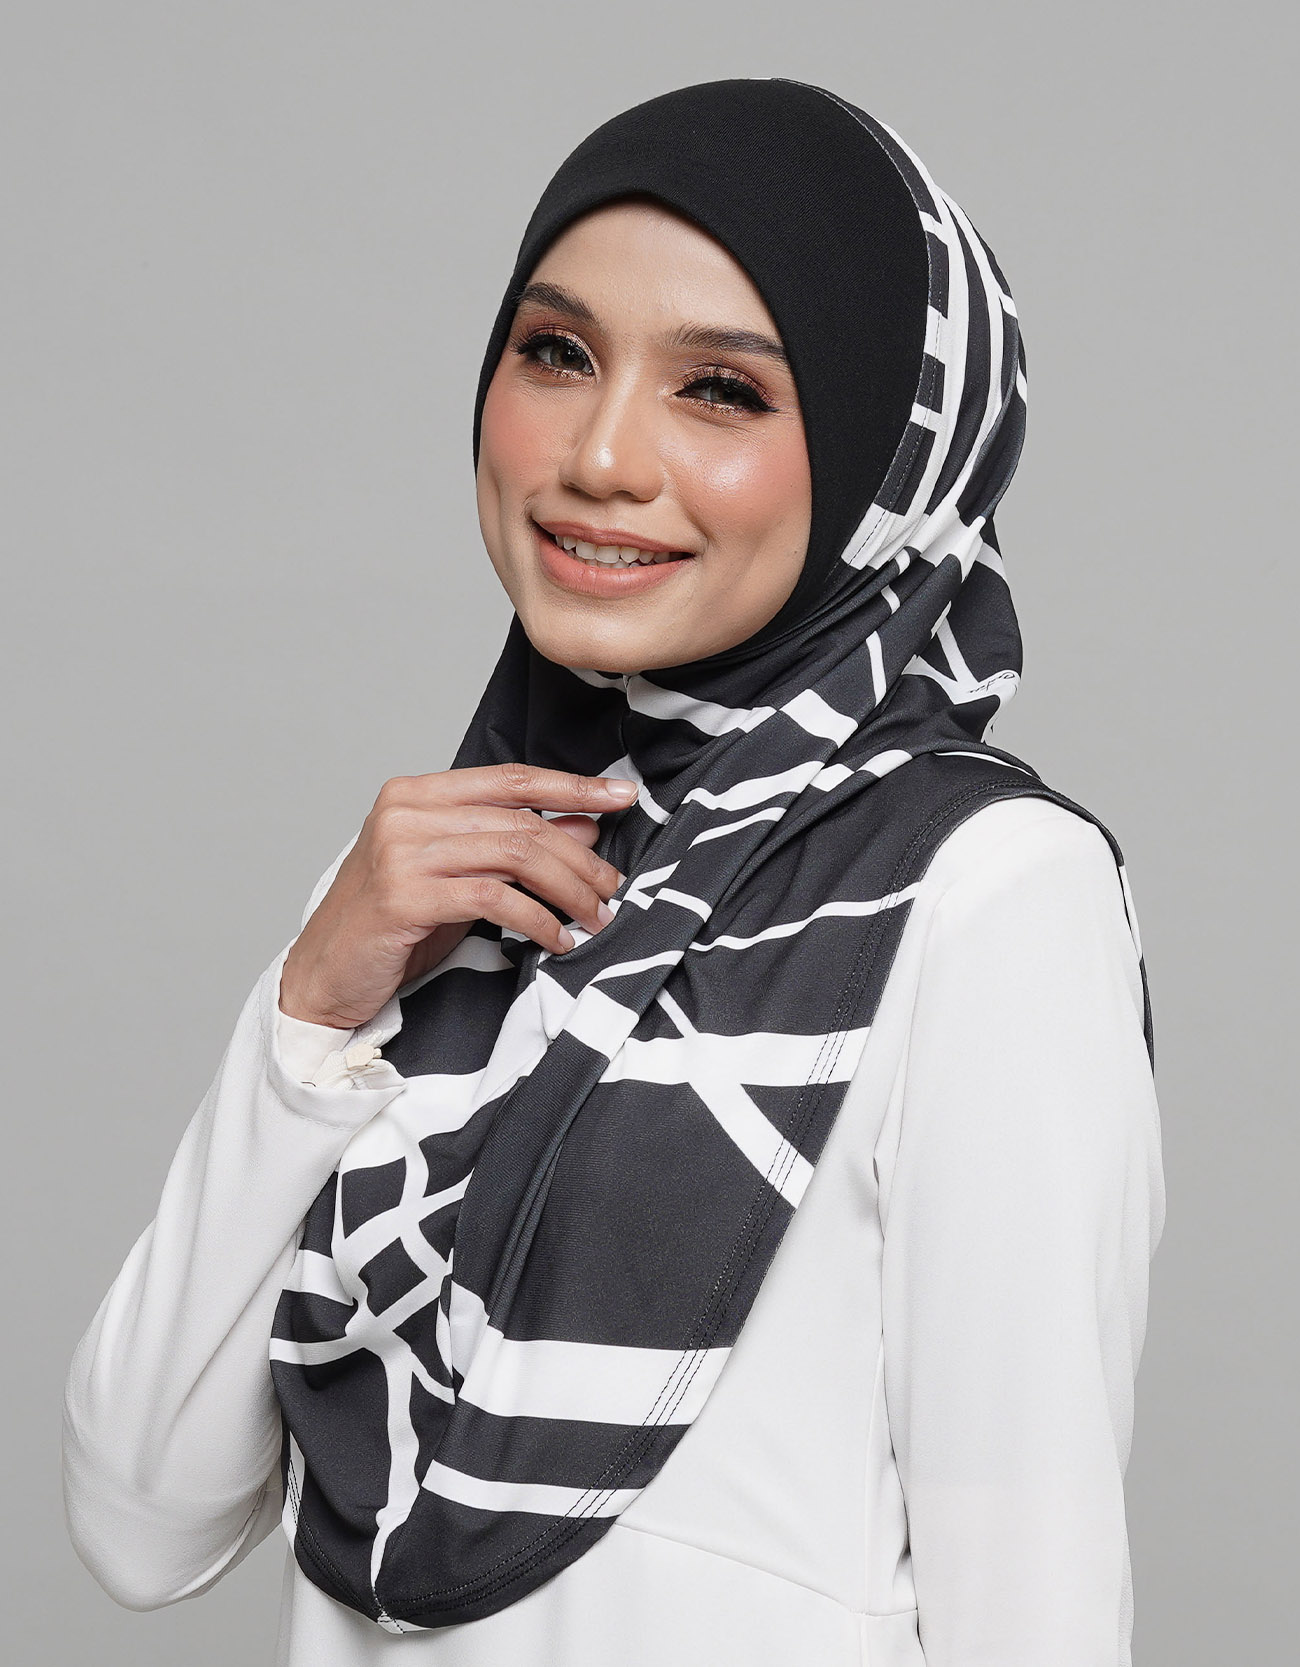 Express Hijab Damia Signature 06 - Black Edition&w=300&zc=1